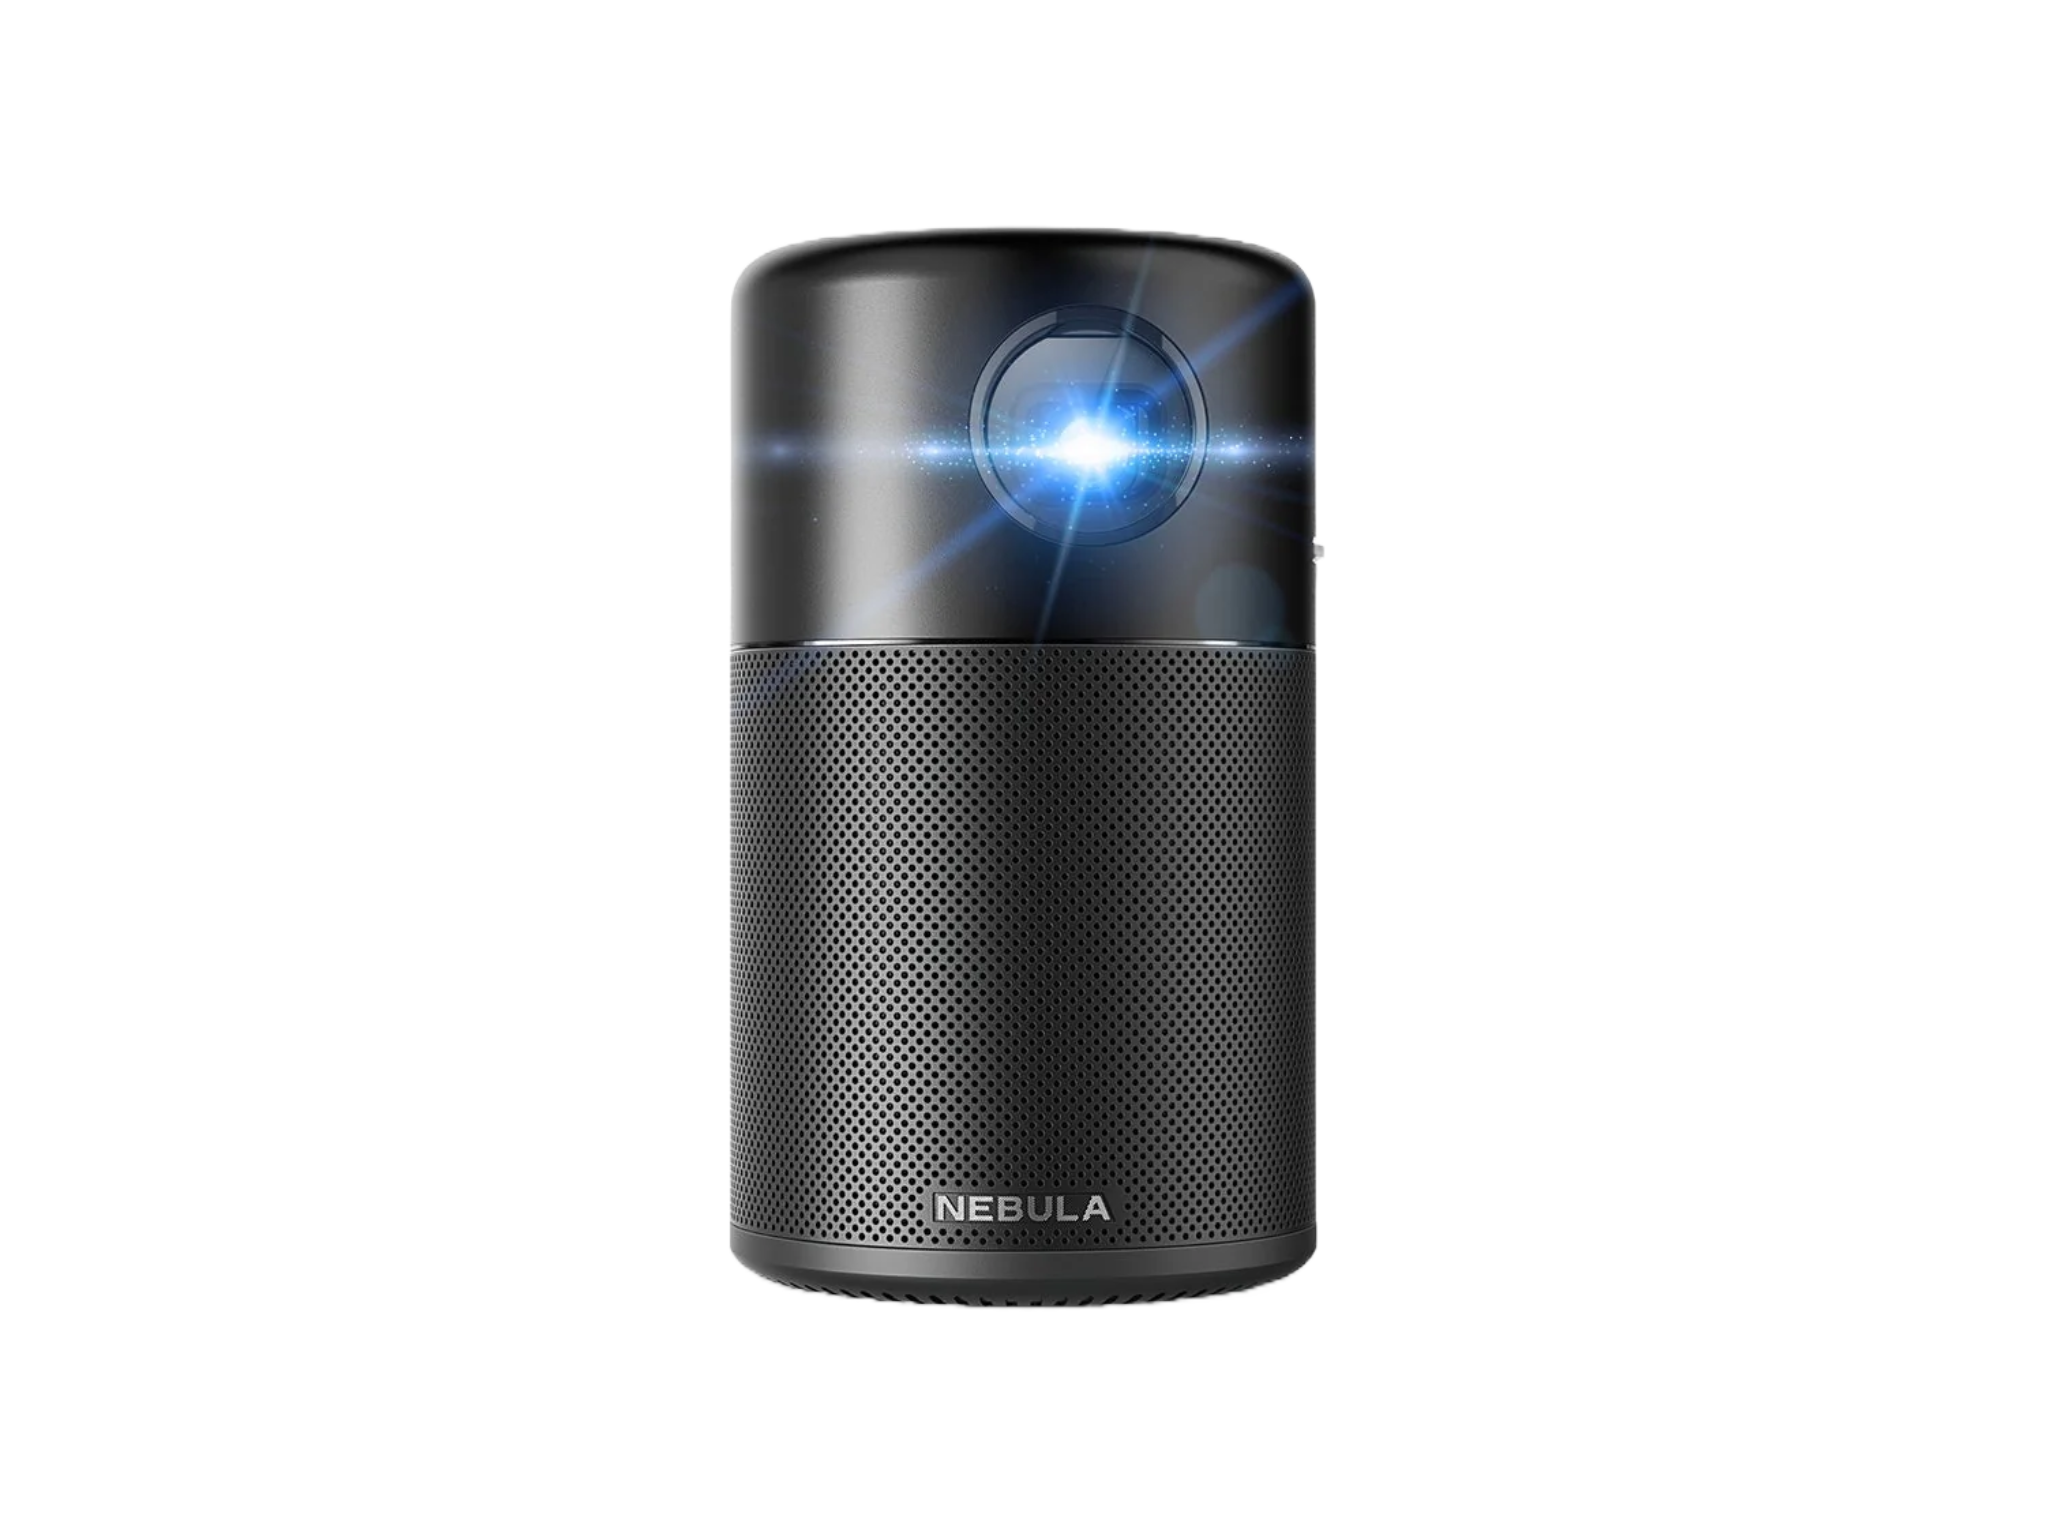 Nebula capsule portable projector